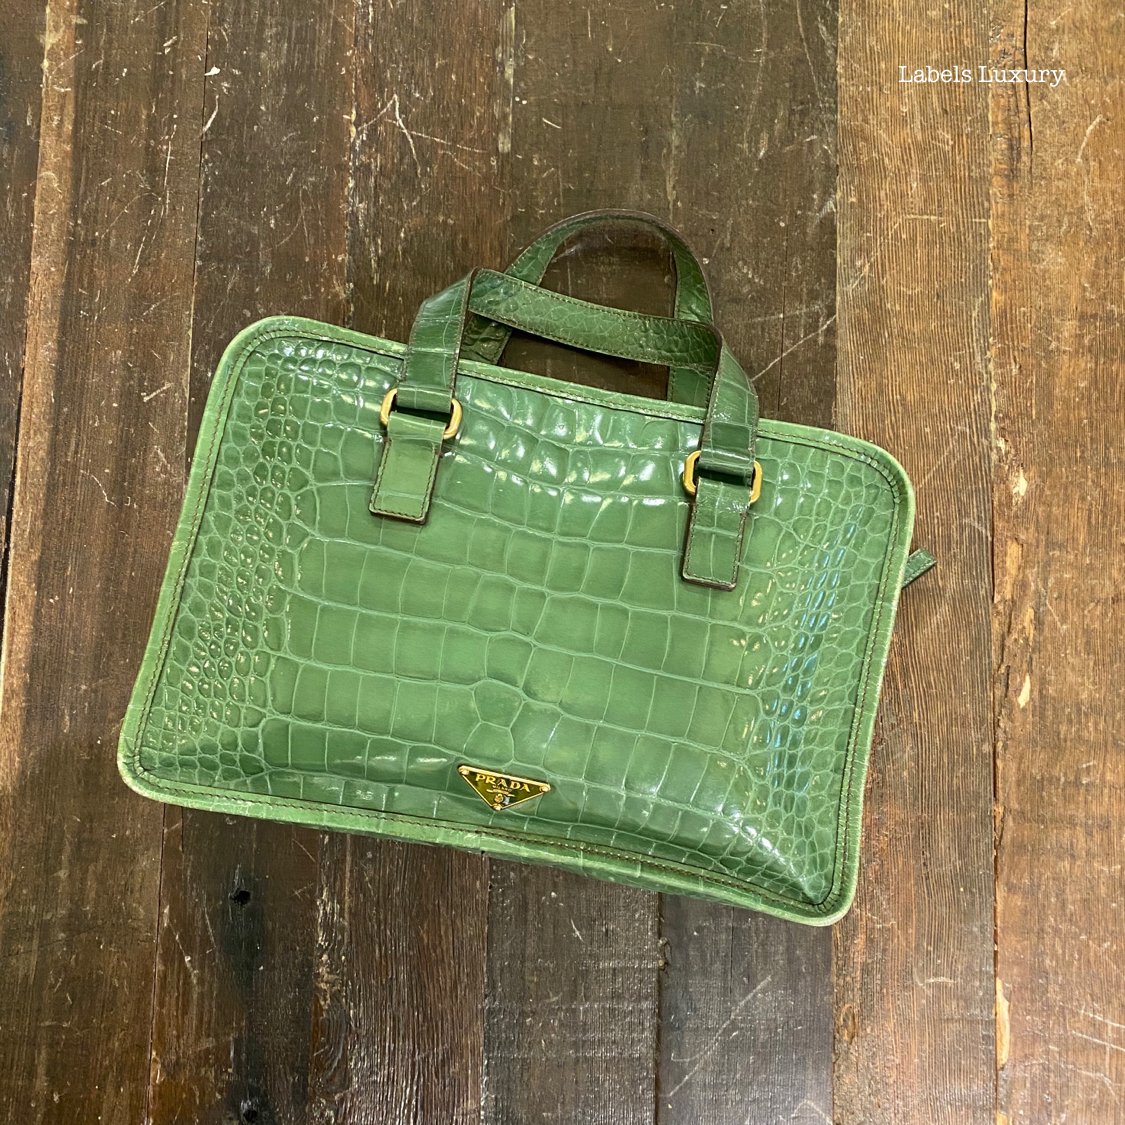 Prada Embossed Leather Handbags